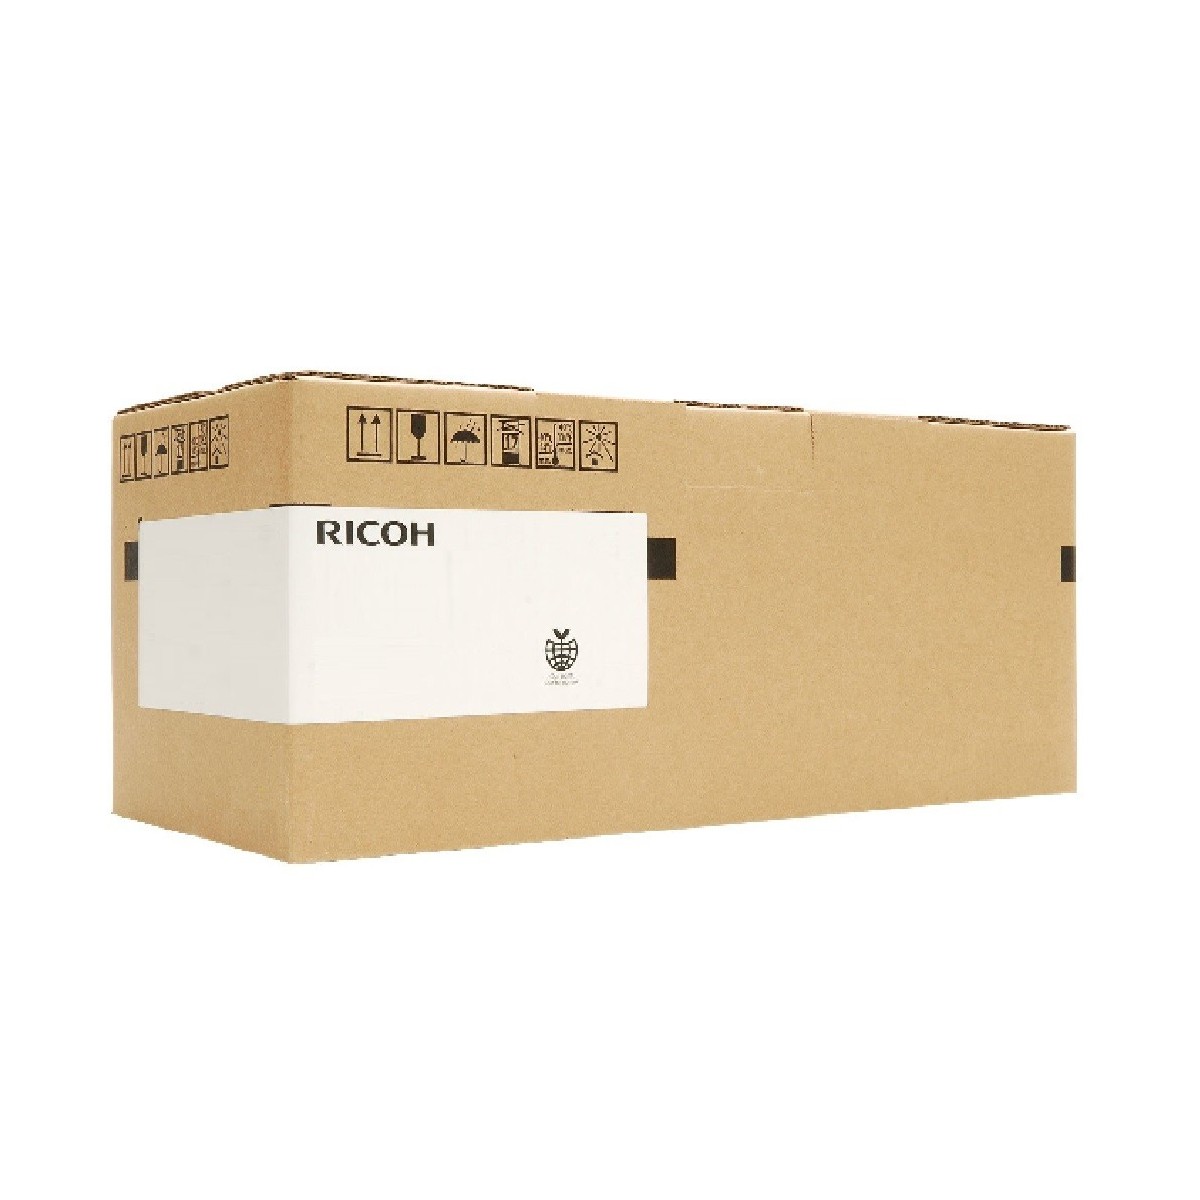 Ricoh B079K150E - Maintenance kit - 150000 pages - Ricoh - Aficio 2035 Aficio 2035E Aficio 2035EG Aficio 2035ES/P - 1 pc(s)